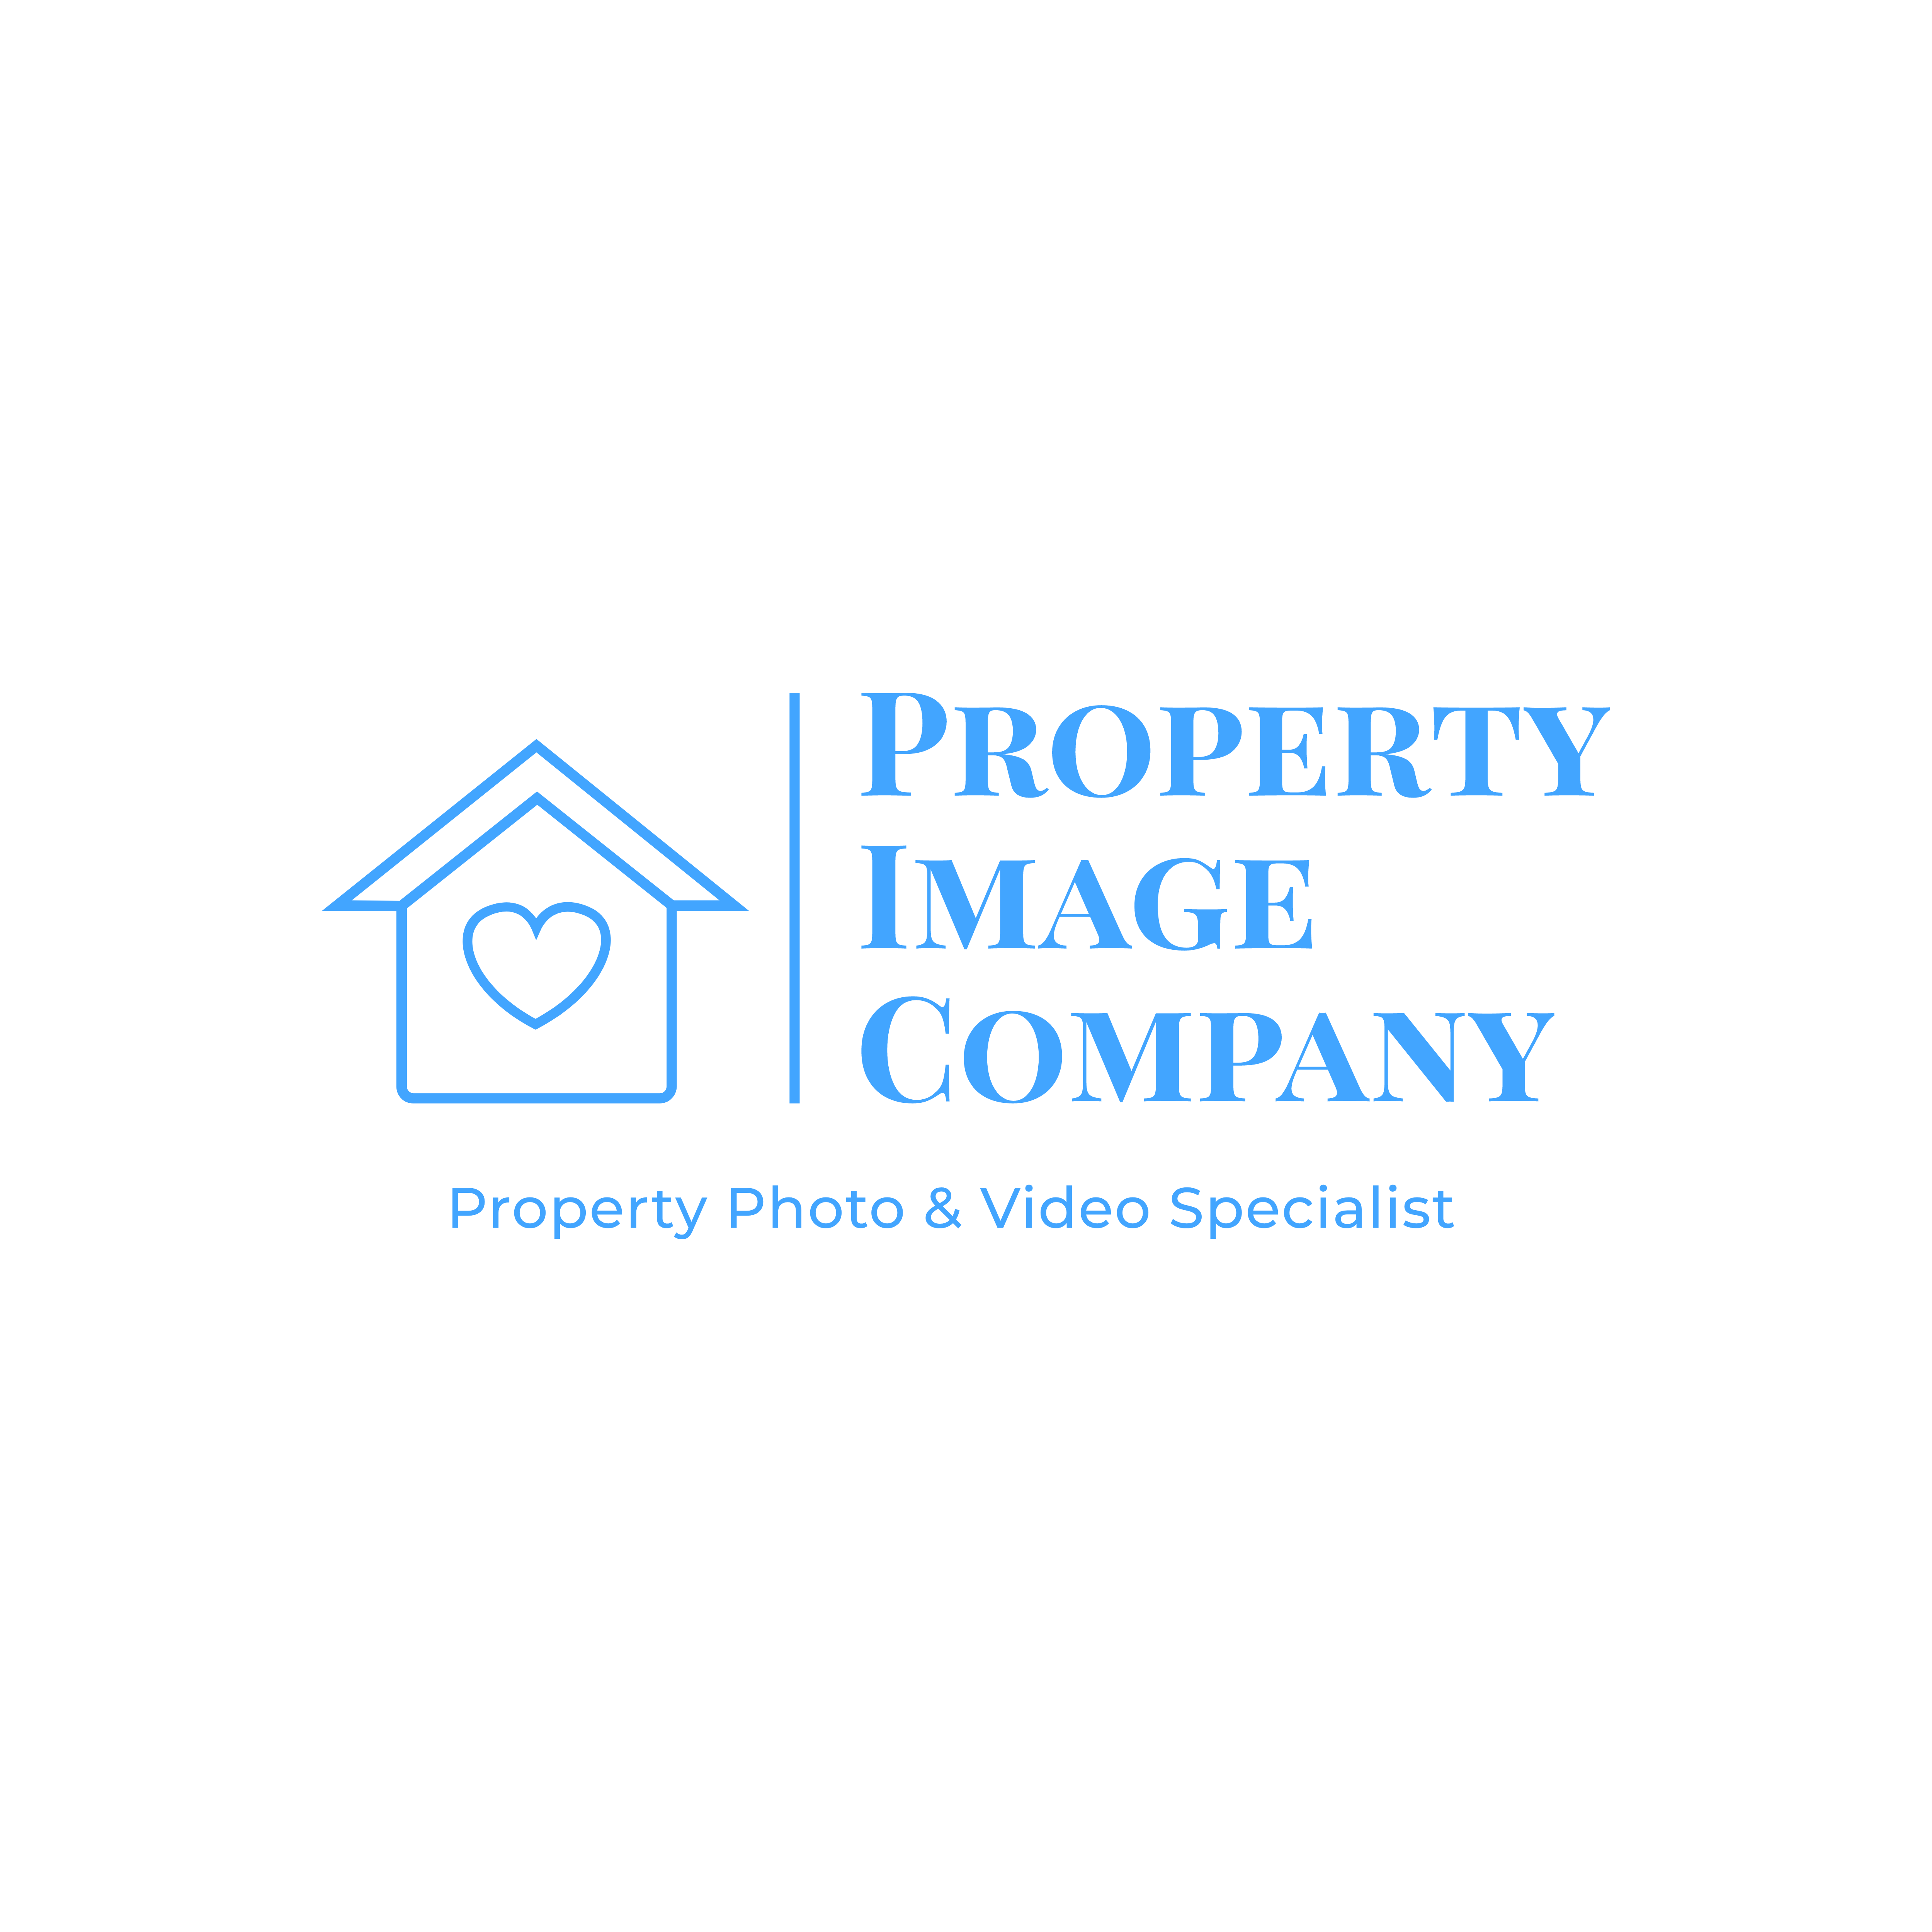 Property Image Company Logo